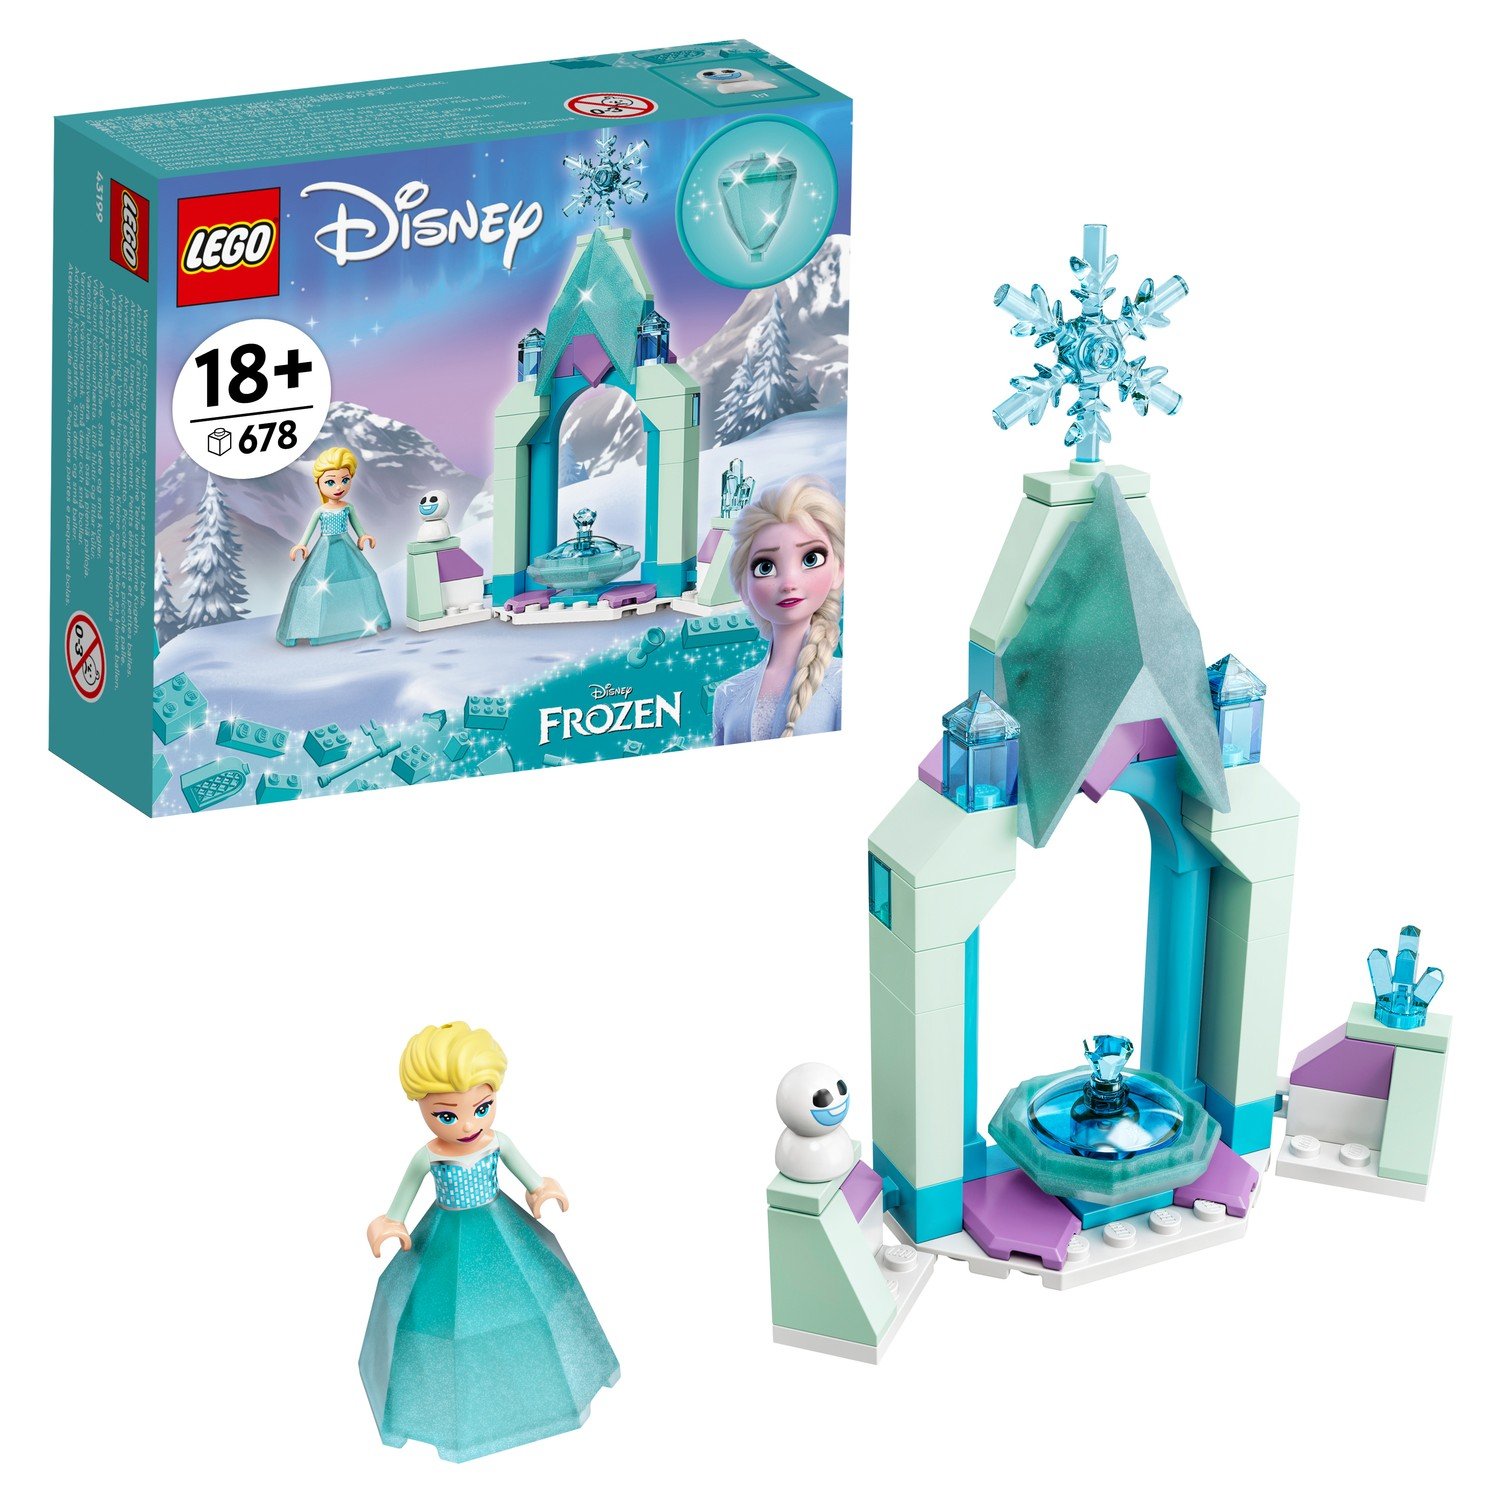 LEGO Disney Princess Frozen Двор замка Эльзы 43199 lego disney princess frozen двор замка эльзы 43199